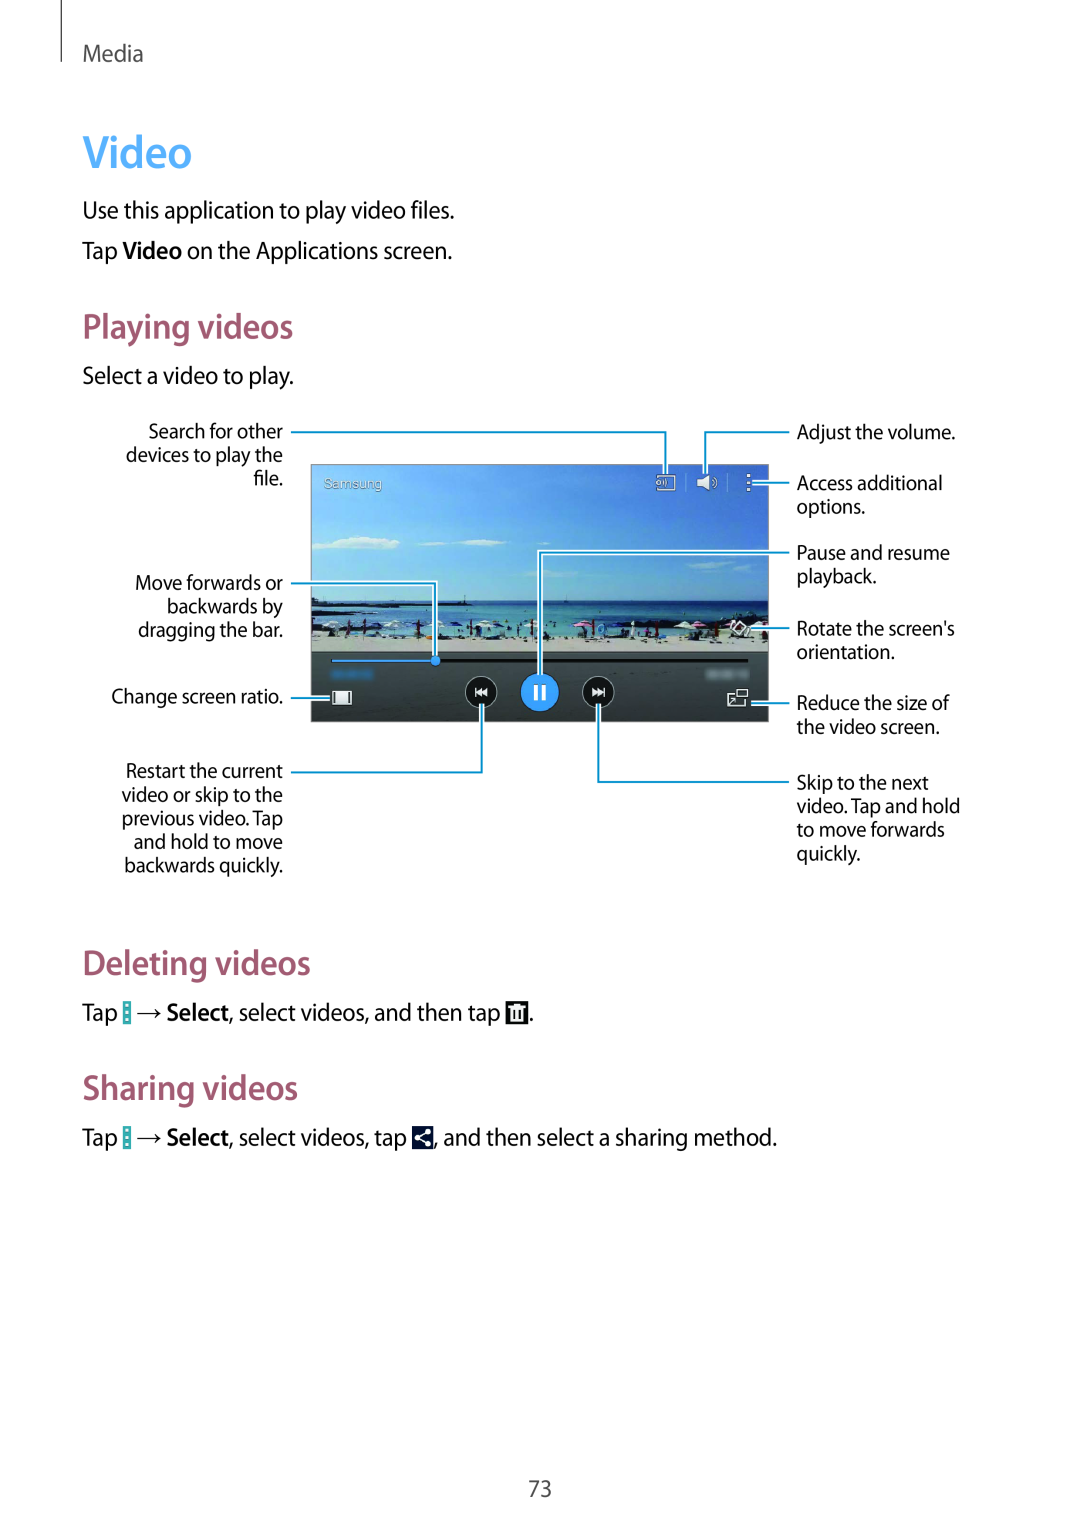 Samsung GT-I9195ZKIVDC, GT-I9195ZKIATO Video, Deleting videos, Sharing videos, Playing videos, Media, Change screen ratio 